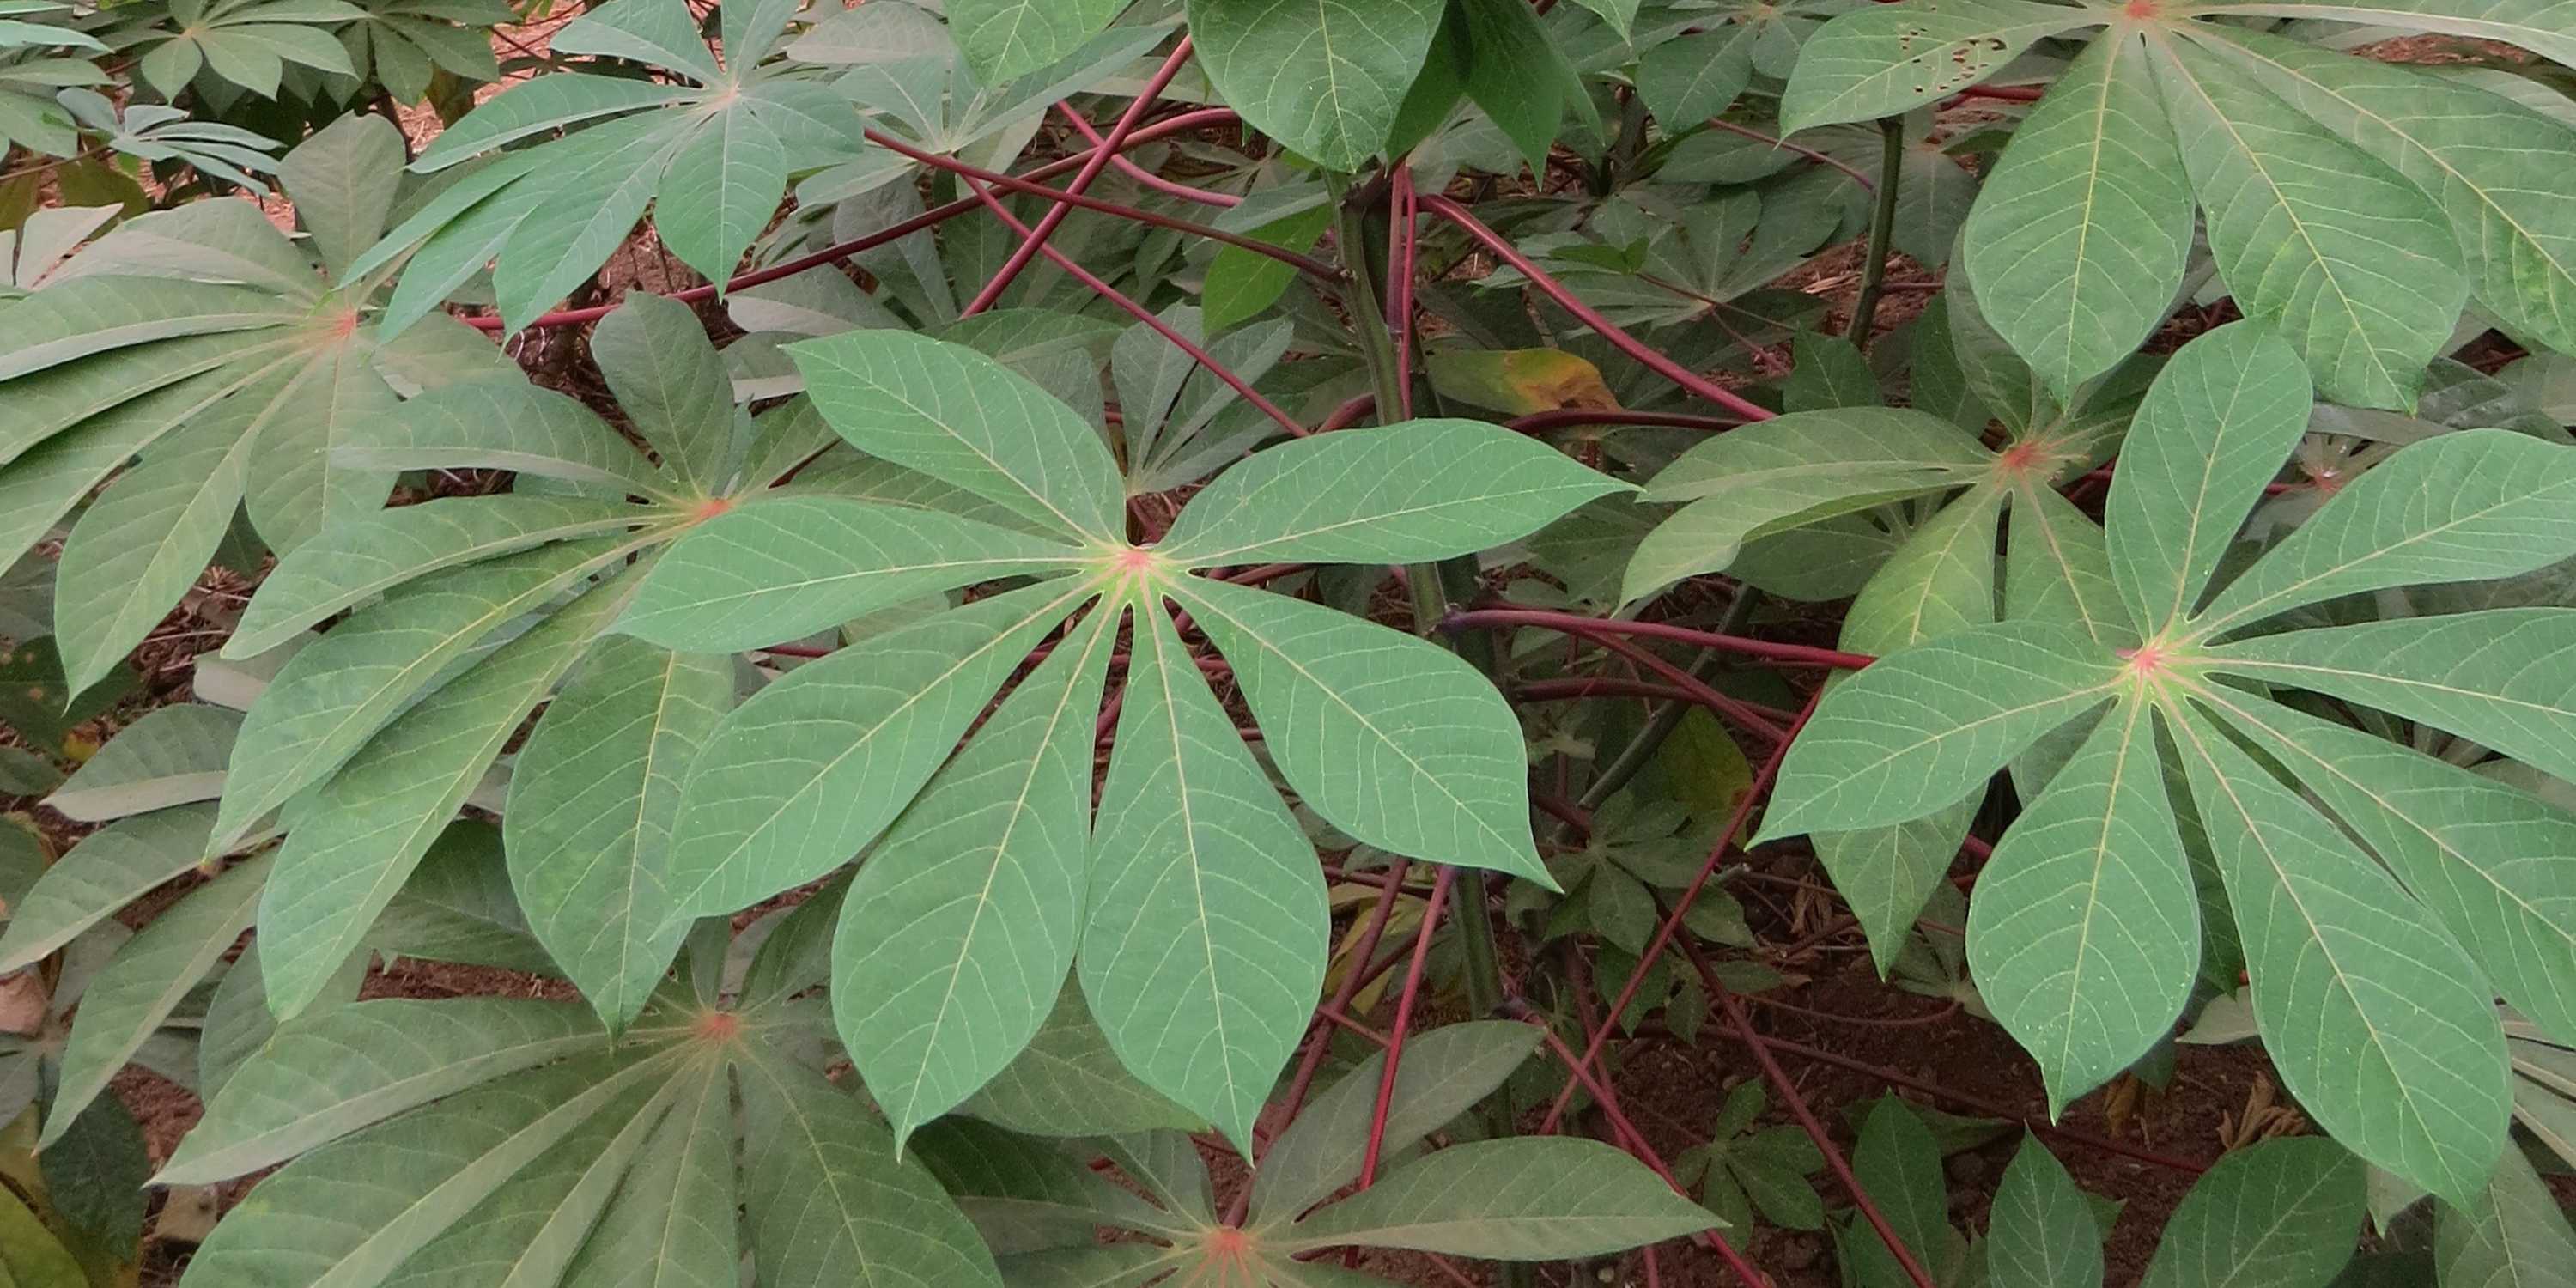 Leaves of a healthy cassava plant in Africa. (Photograph: Wilhelm Gruissem / ETH Zurich)